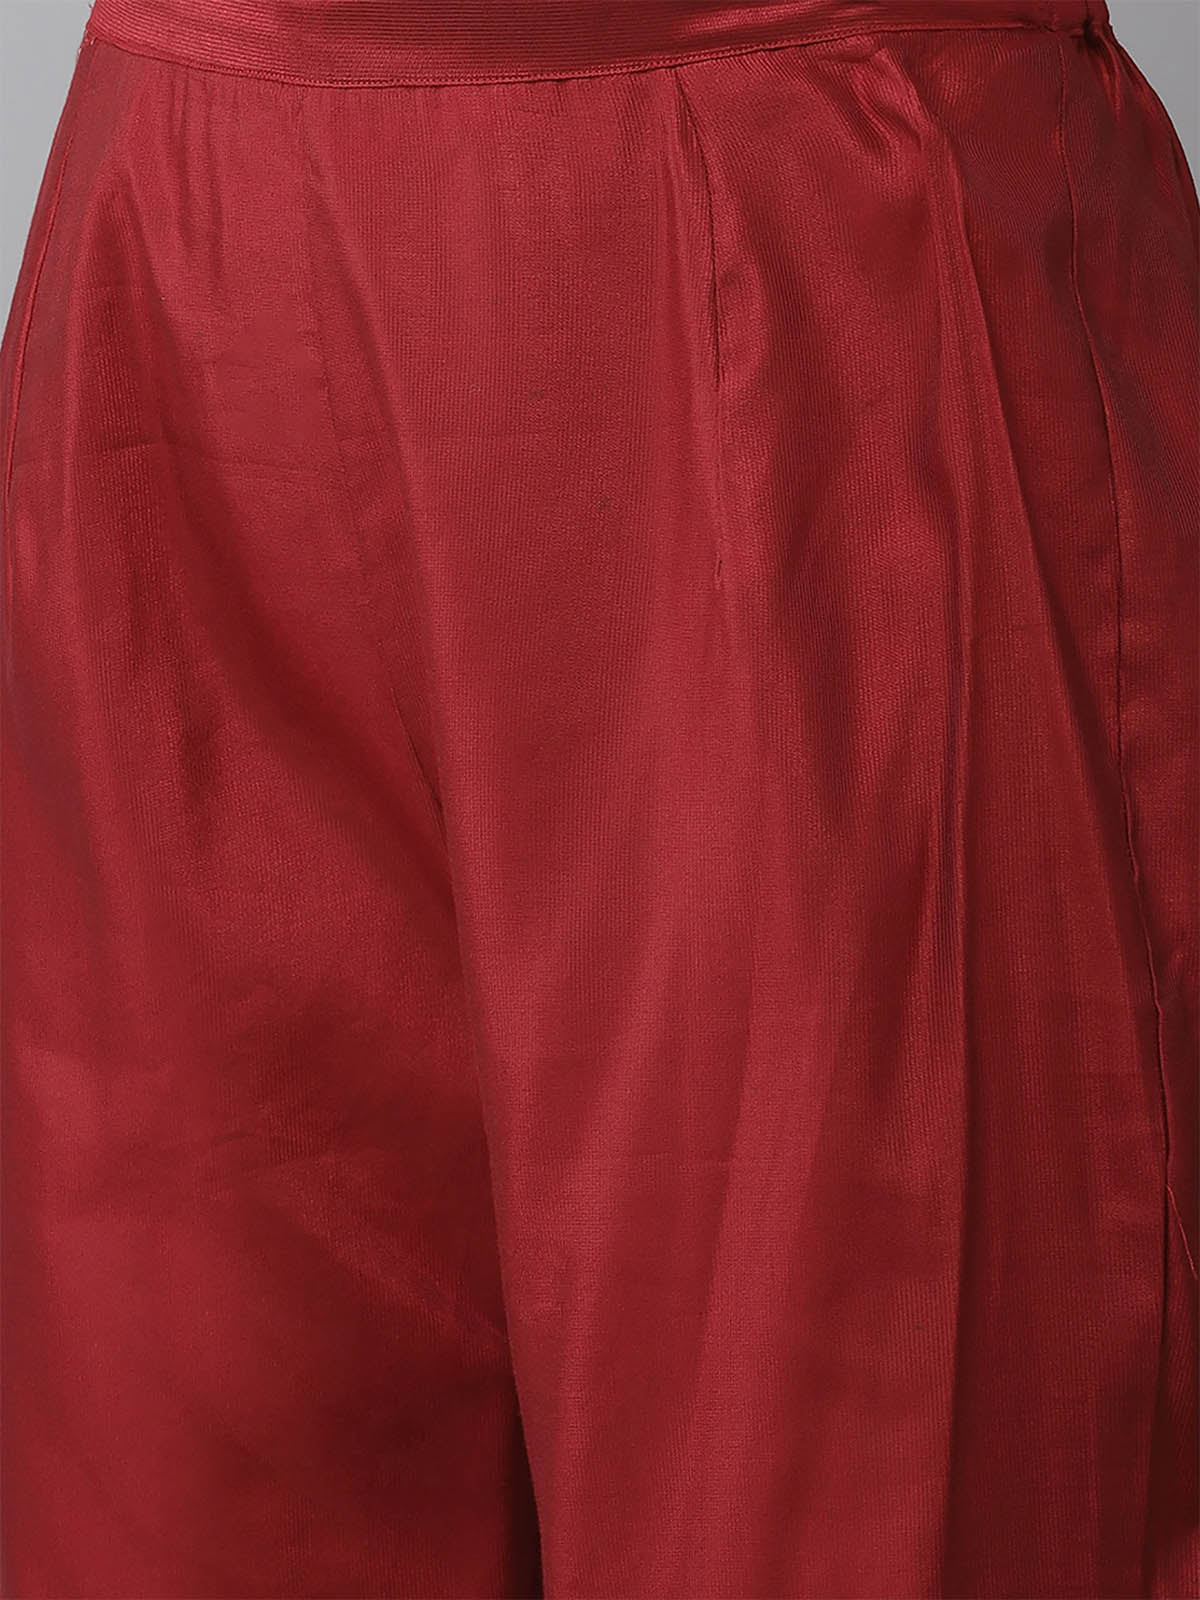 Odette Women Red Solid Straight Stitched Kurta Set